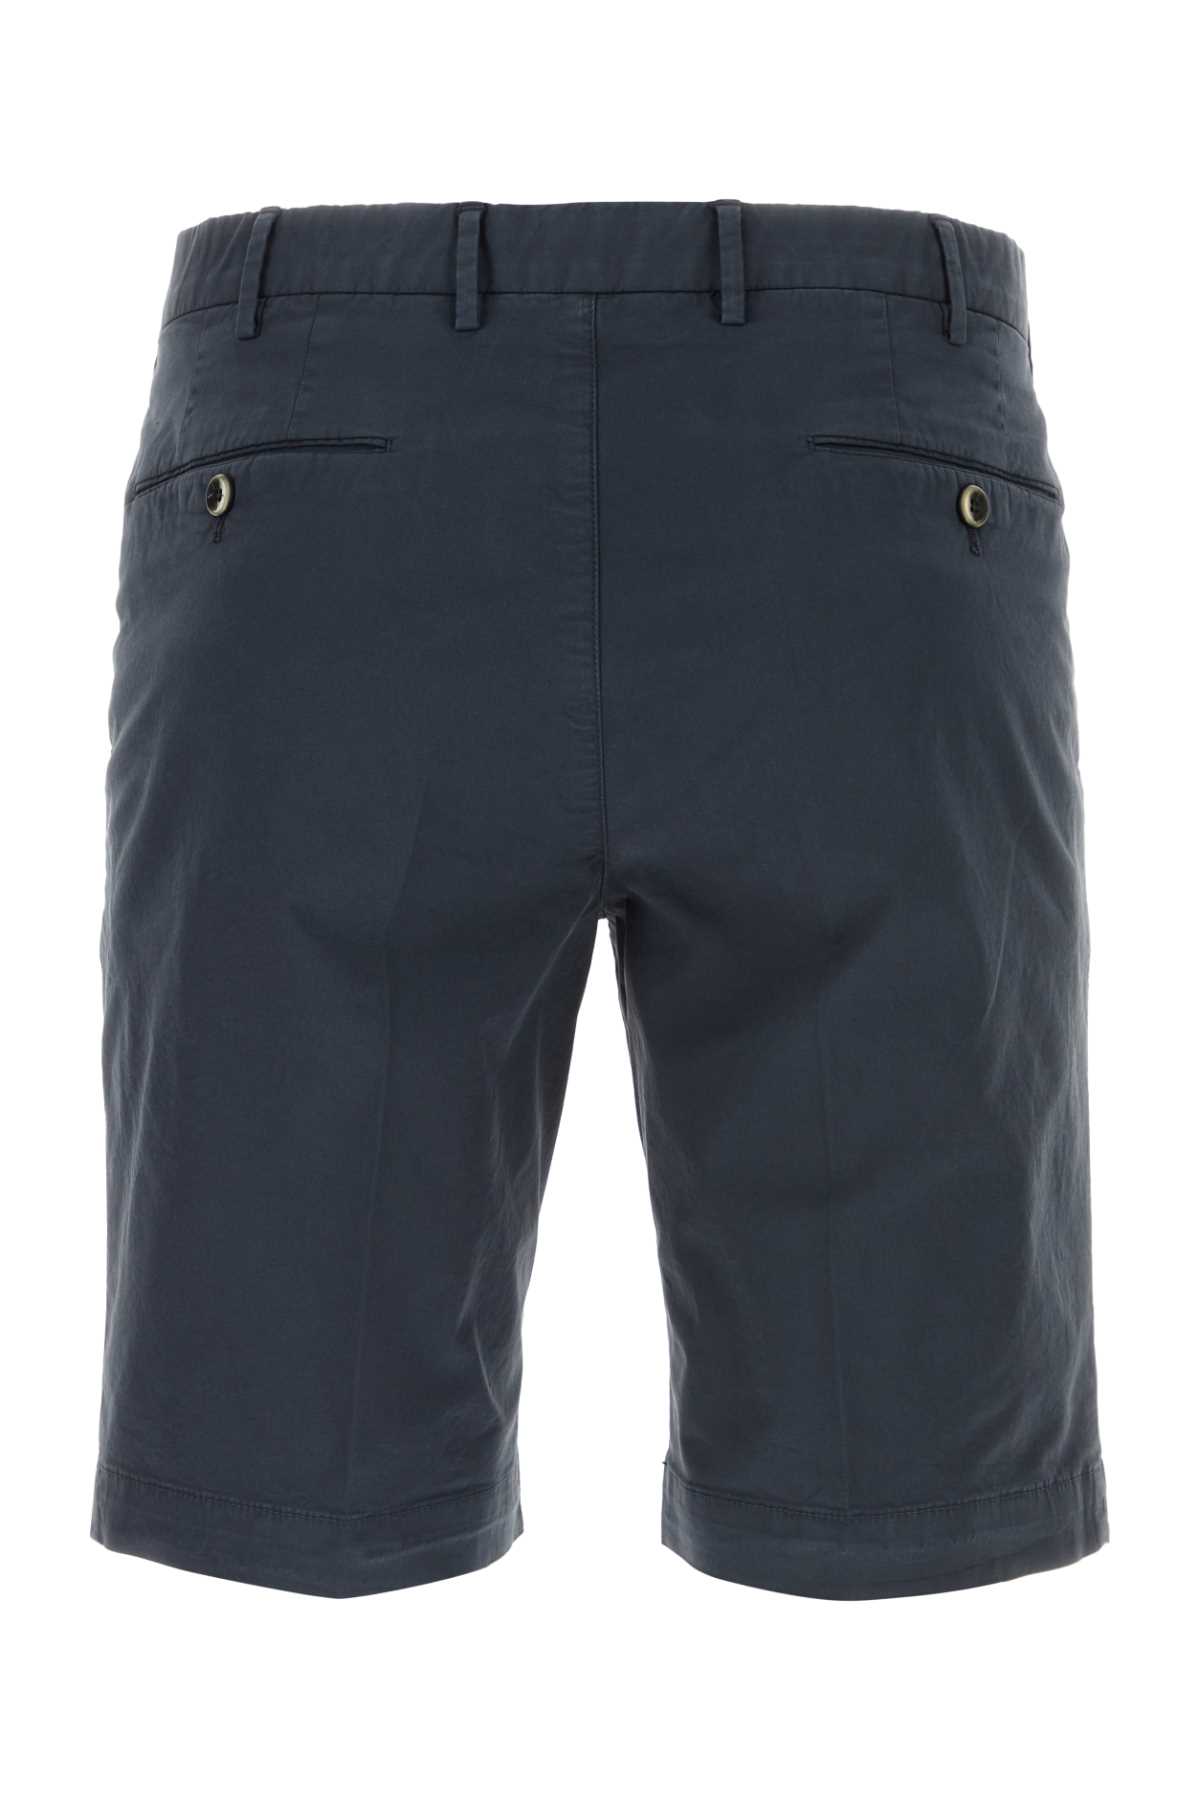 Pt01 Navy Blue Stretch Cotton Bermuda Shorts